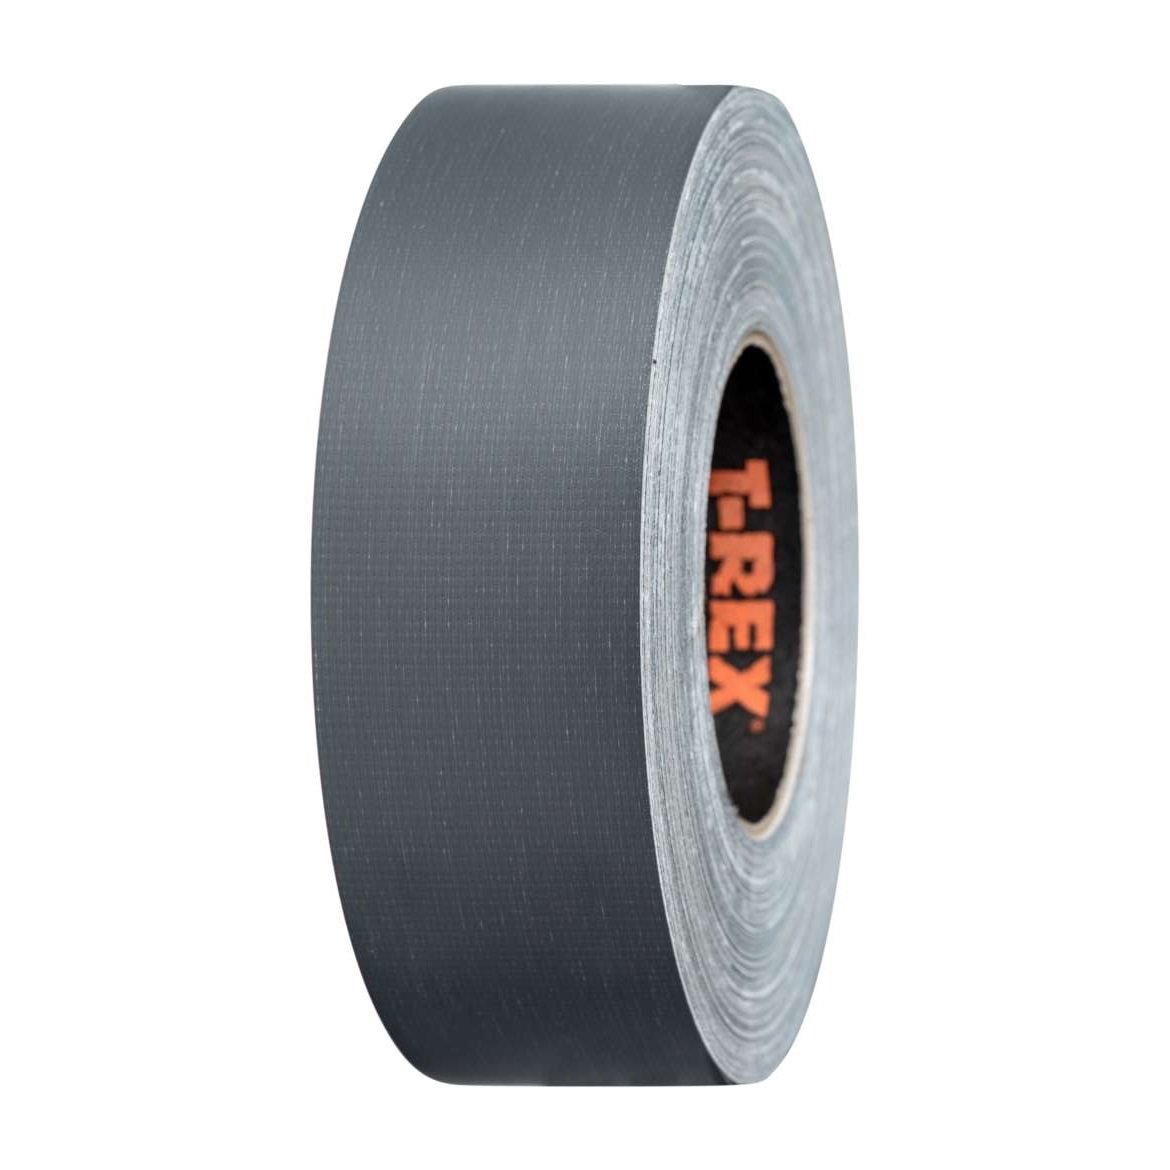 Shurtape T-REX Duct Tape 48mm x 11m Graphite Grey 